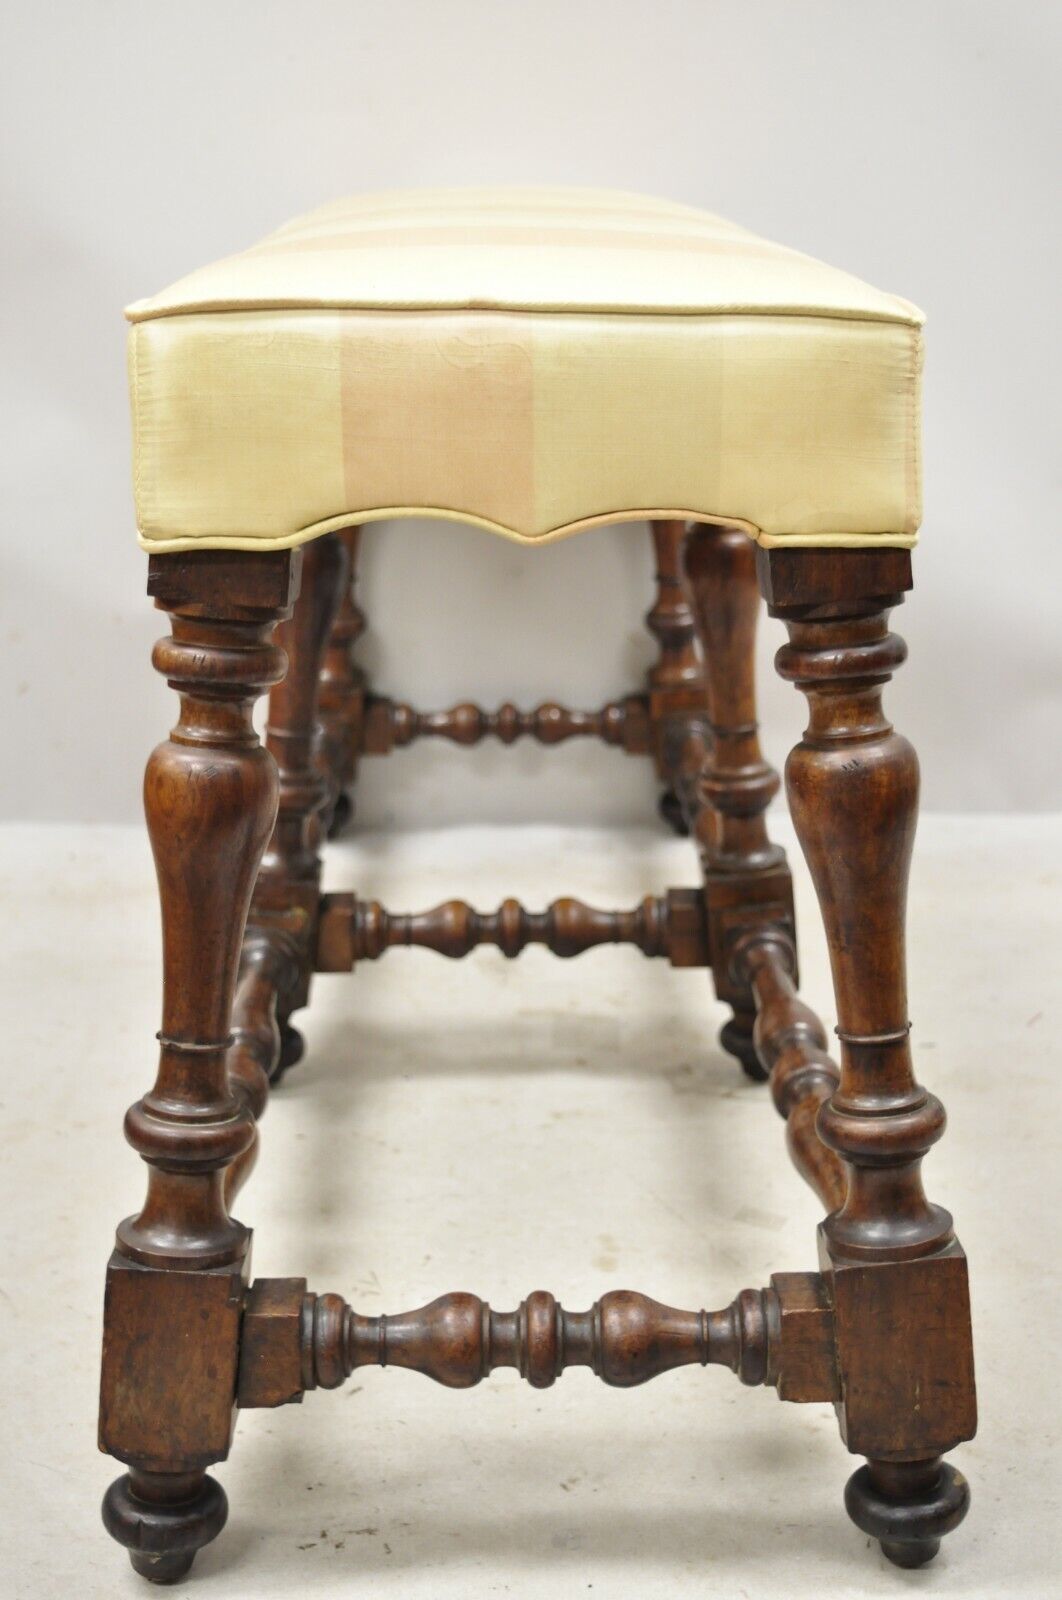 Antique Italian Renaissance Jacobean 6 Turn Carved Walnut Legs Upholstered Bench